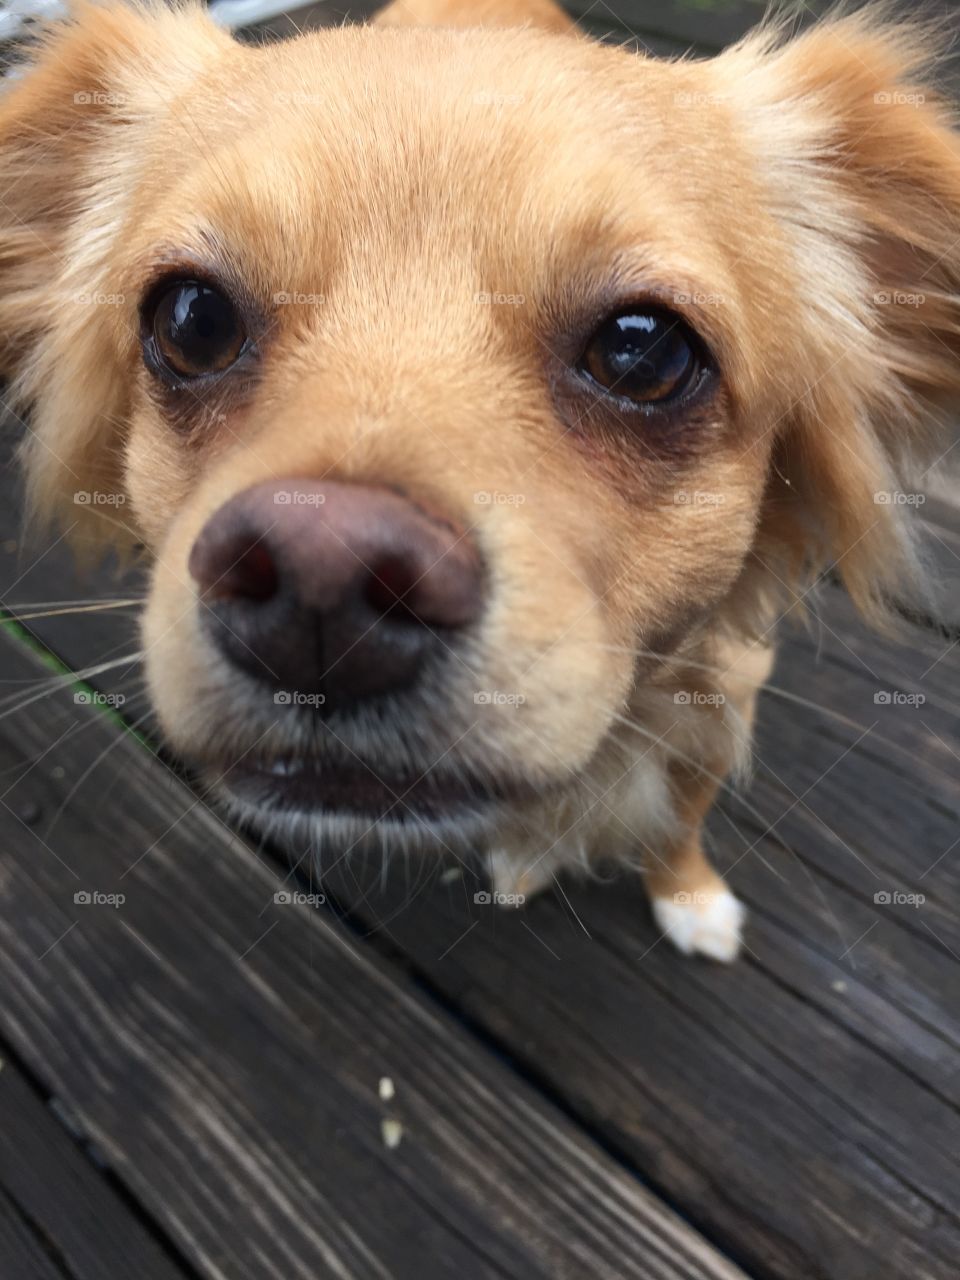 Chihuahua nose checking out camera